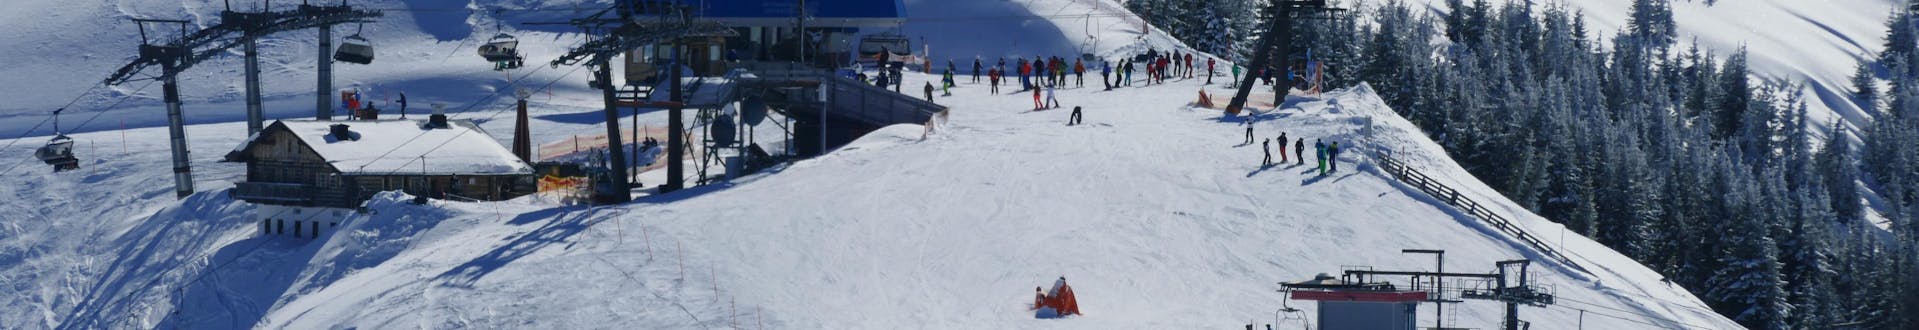 Adults and kids skiing in Grossarl ski resort.